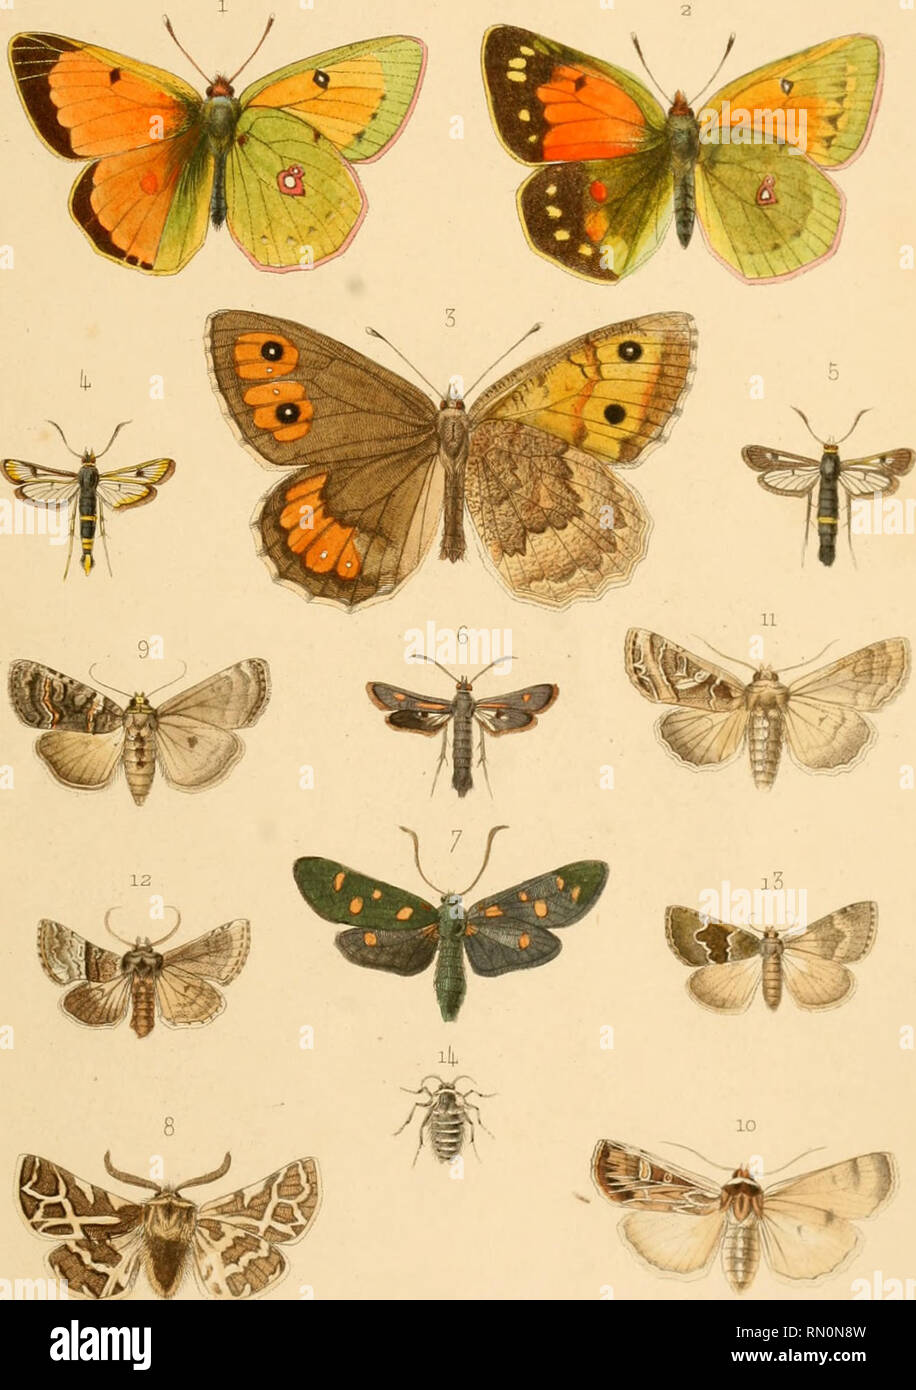 . Annales de la Société entomologique de Belgique. Insects; Entomology. .^n/uiJ&amp;r de îa Socieée £n£orrwIi)tfwiie de Bel^mue. ? nu. P.'.!.. /tai/er pt e-t j'r. i 2 Colias Mynnid.one,if.77. ^/^. ,?.j 9 Bryophila petricolor, £ed. 3 Satyrus Beroè,^*^v&lt;v Kj'-. 10 A^rotis multifida, Ze&lt;/. I(, 5 Sesia Yaiihica., Ze^d S.^. u Mameatxa praedita,jW. 6 Sesia'Stiziformis, ^^^ Var. 12 Cleophana opposita, Z*rf'. 7 Zjôaena Stoecliadis,^/c^. Ku-. i3 Madopa platyzona,/^*/. 8 Ocnofiyna Loewii^i&quot;. ^^. ilp Biston incisaiius,/.v/. I J^if.à'i'ii^-.v, S.r.Mûjnon.. ir^UùfnétuiT t%t/.. Please note that t Stock Photo